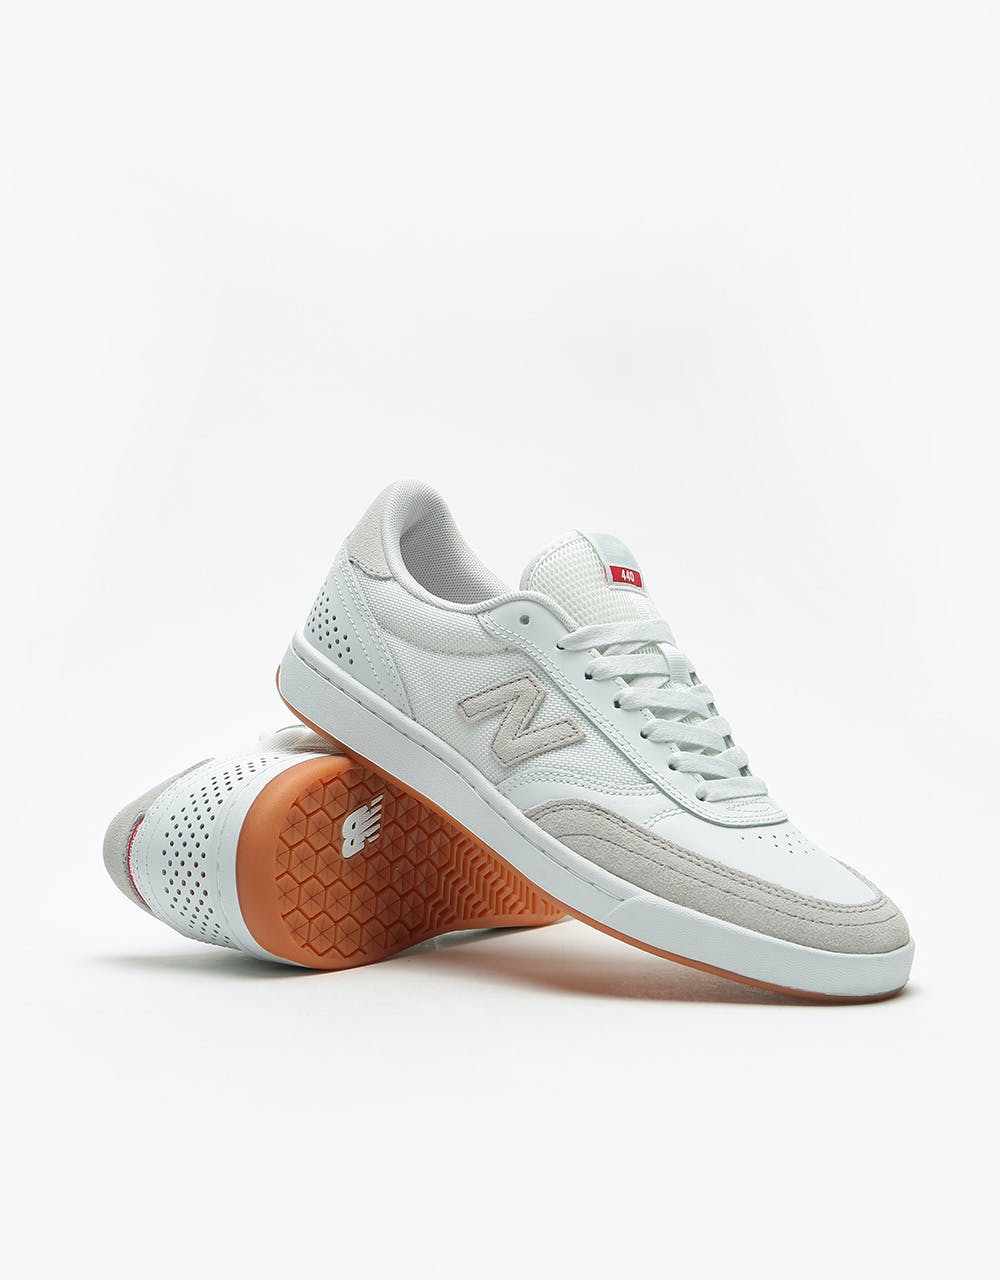 New Balance Numeric 440 Skate Shoes - White/White